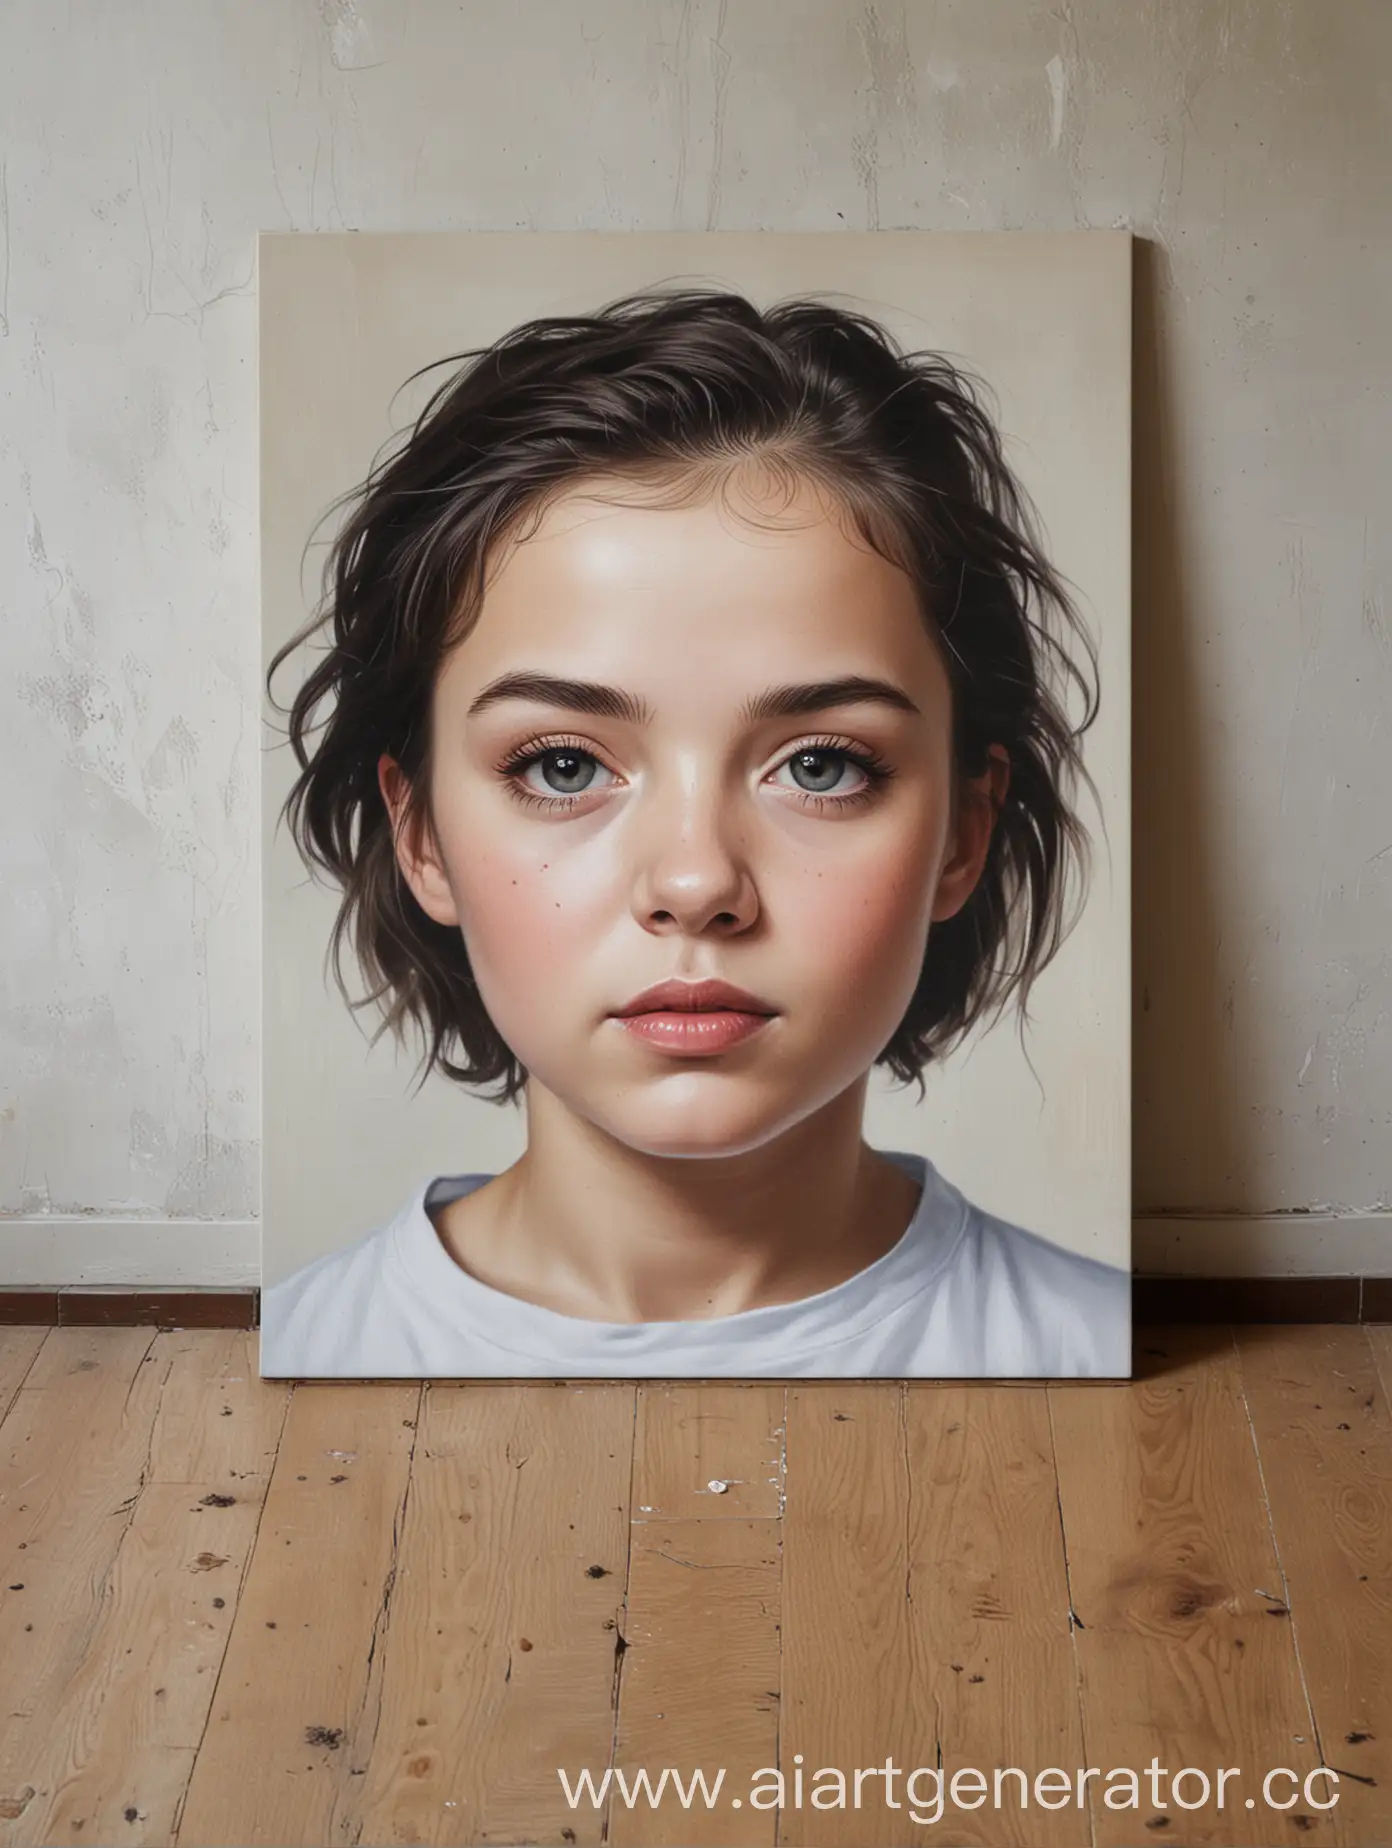 Canvas-Portrait-on-Floor-50x70-cm-Artwork-Displayed